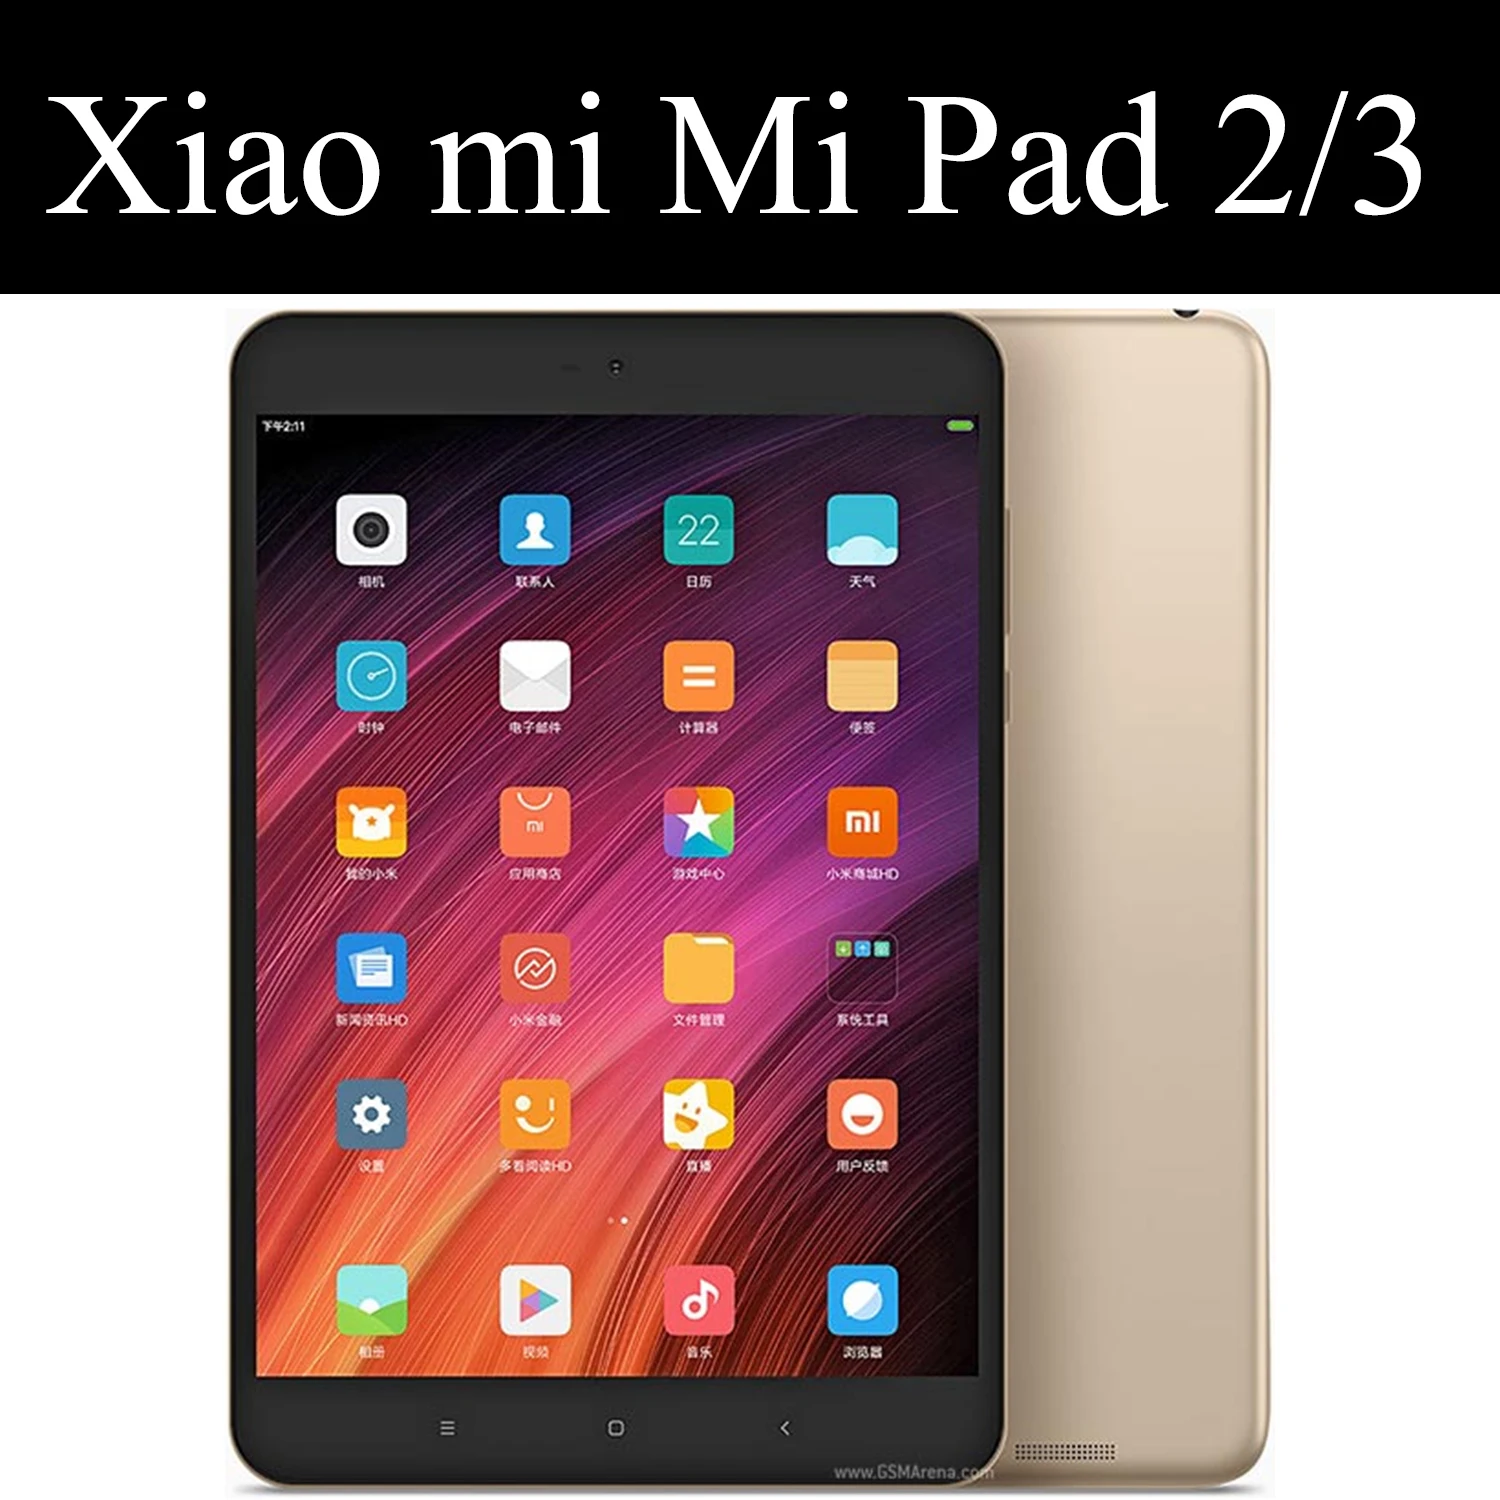 Чехол для планшета Xiaomi Mi Pad 2/3 7," кожаный Смарт-режим сна funda Trifold Stand Solid cover capa funda card для Pad2 Pad3